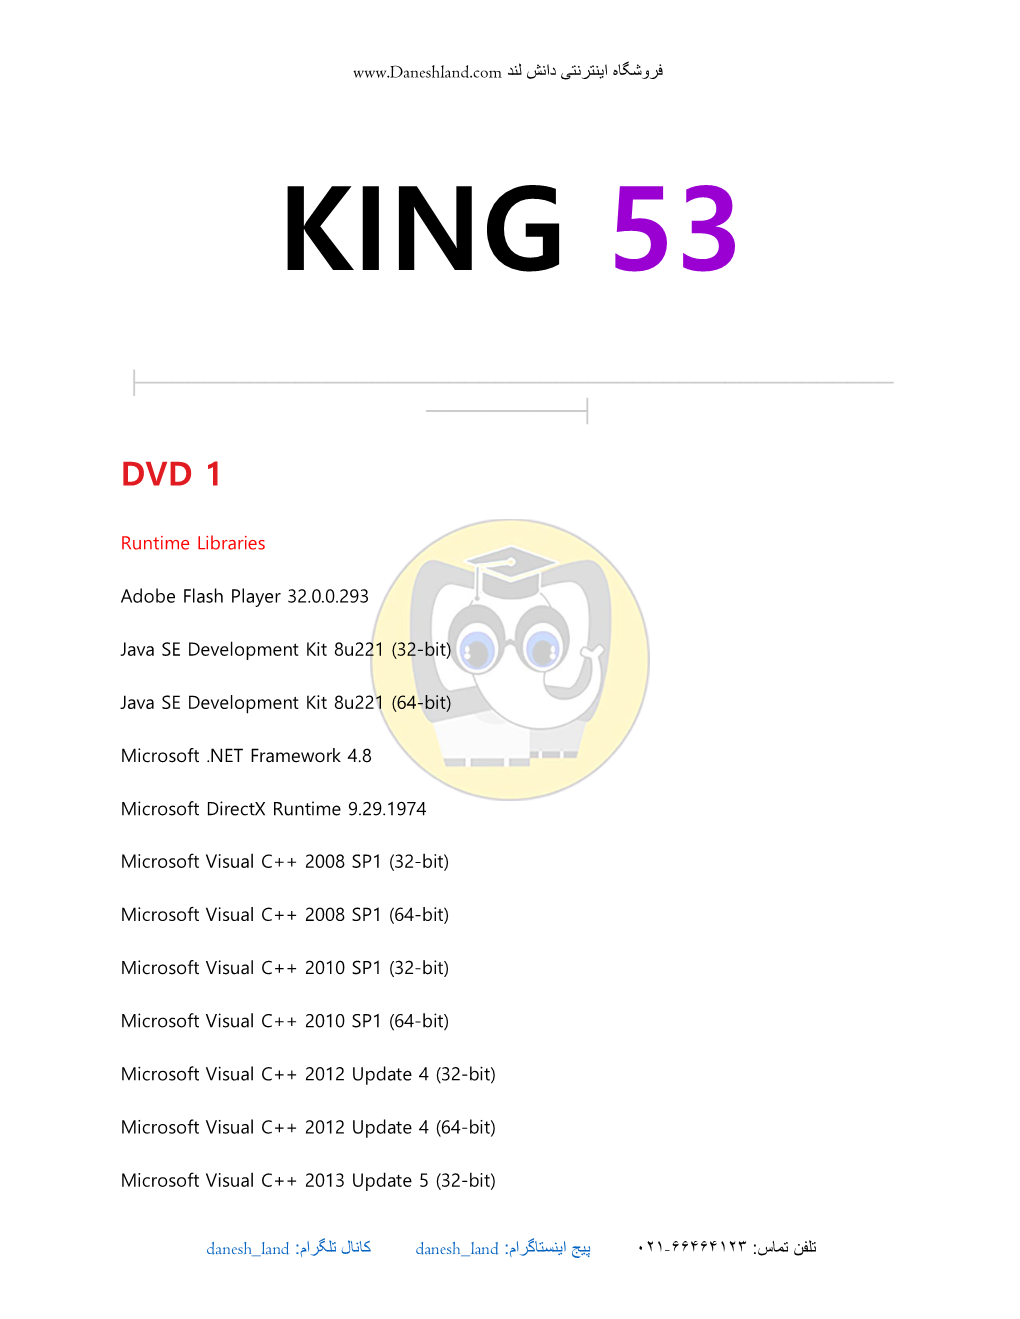 King53 Daneshland.Pdf